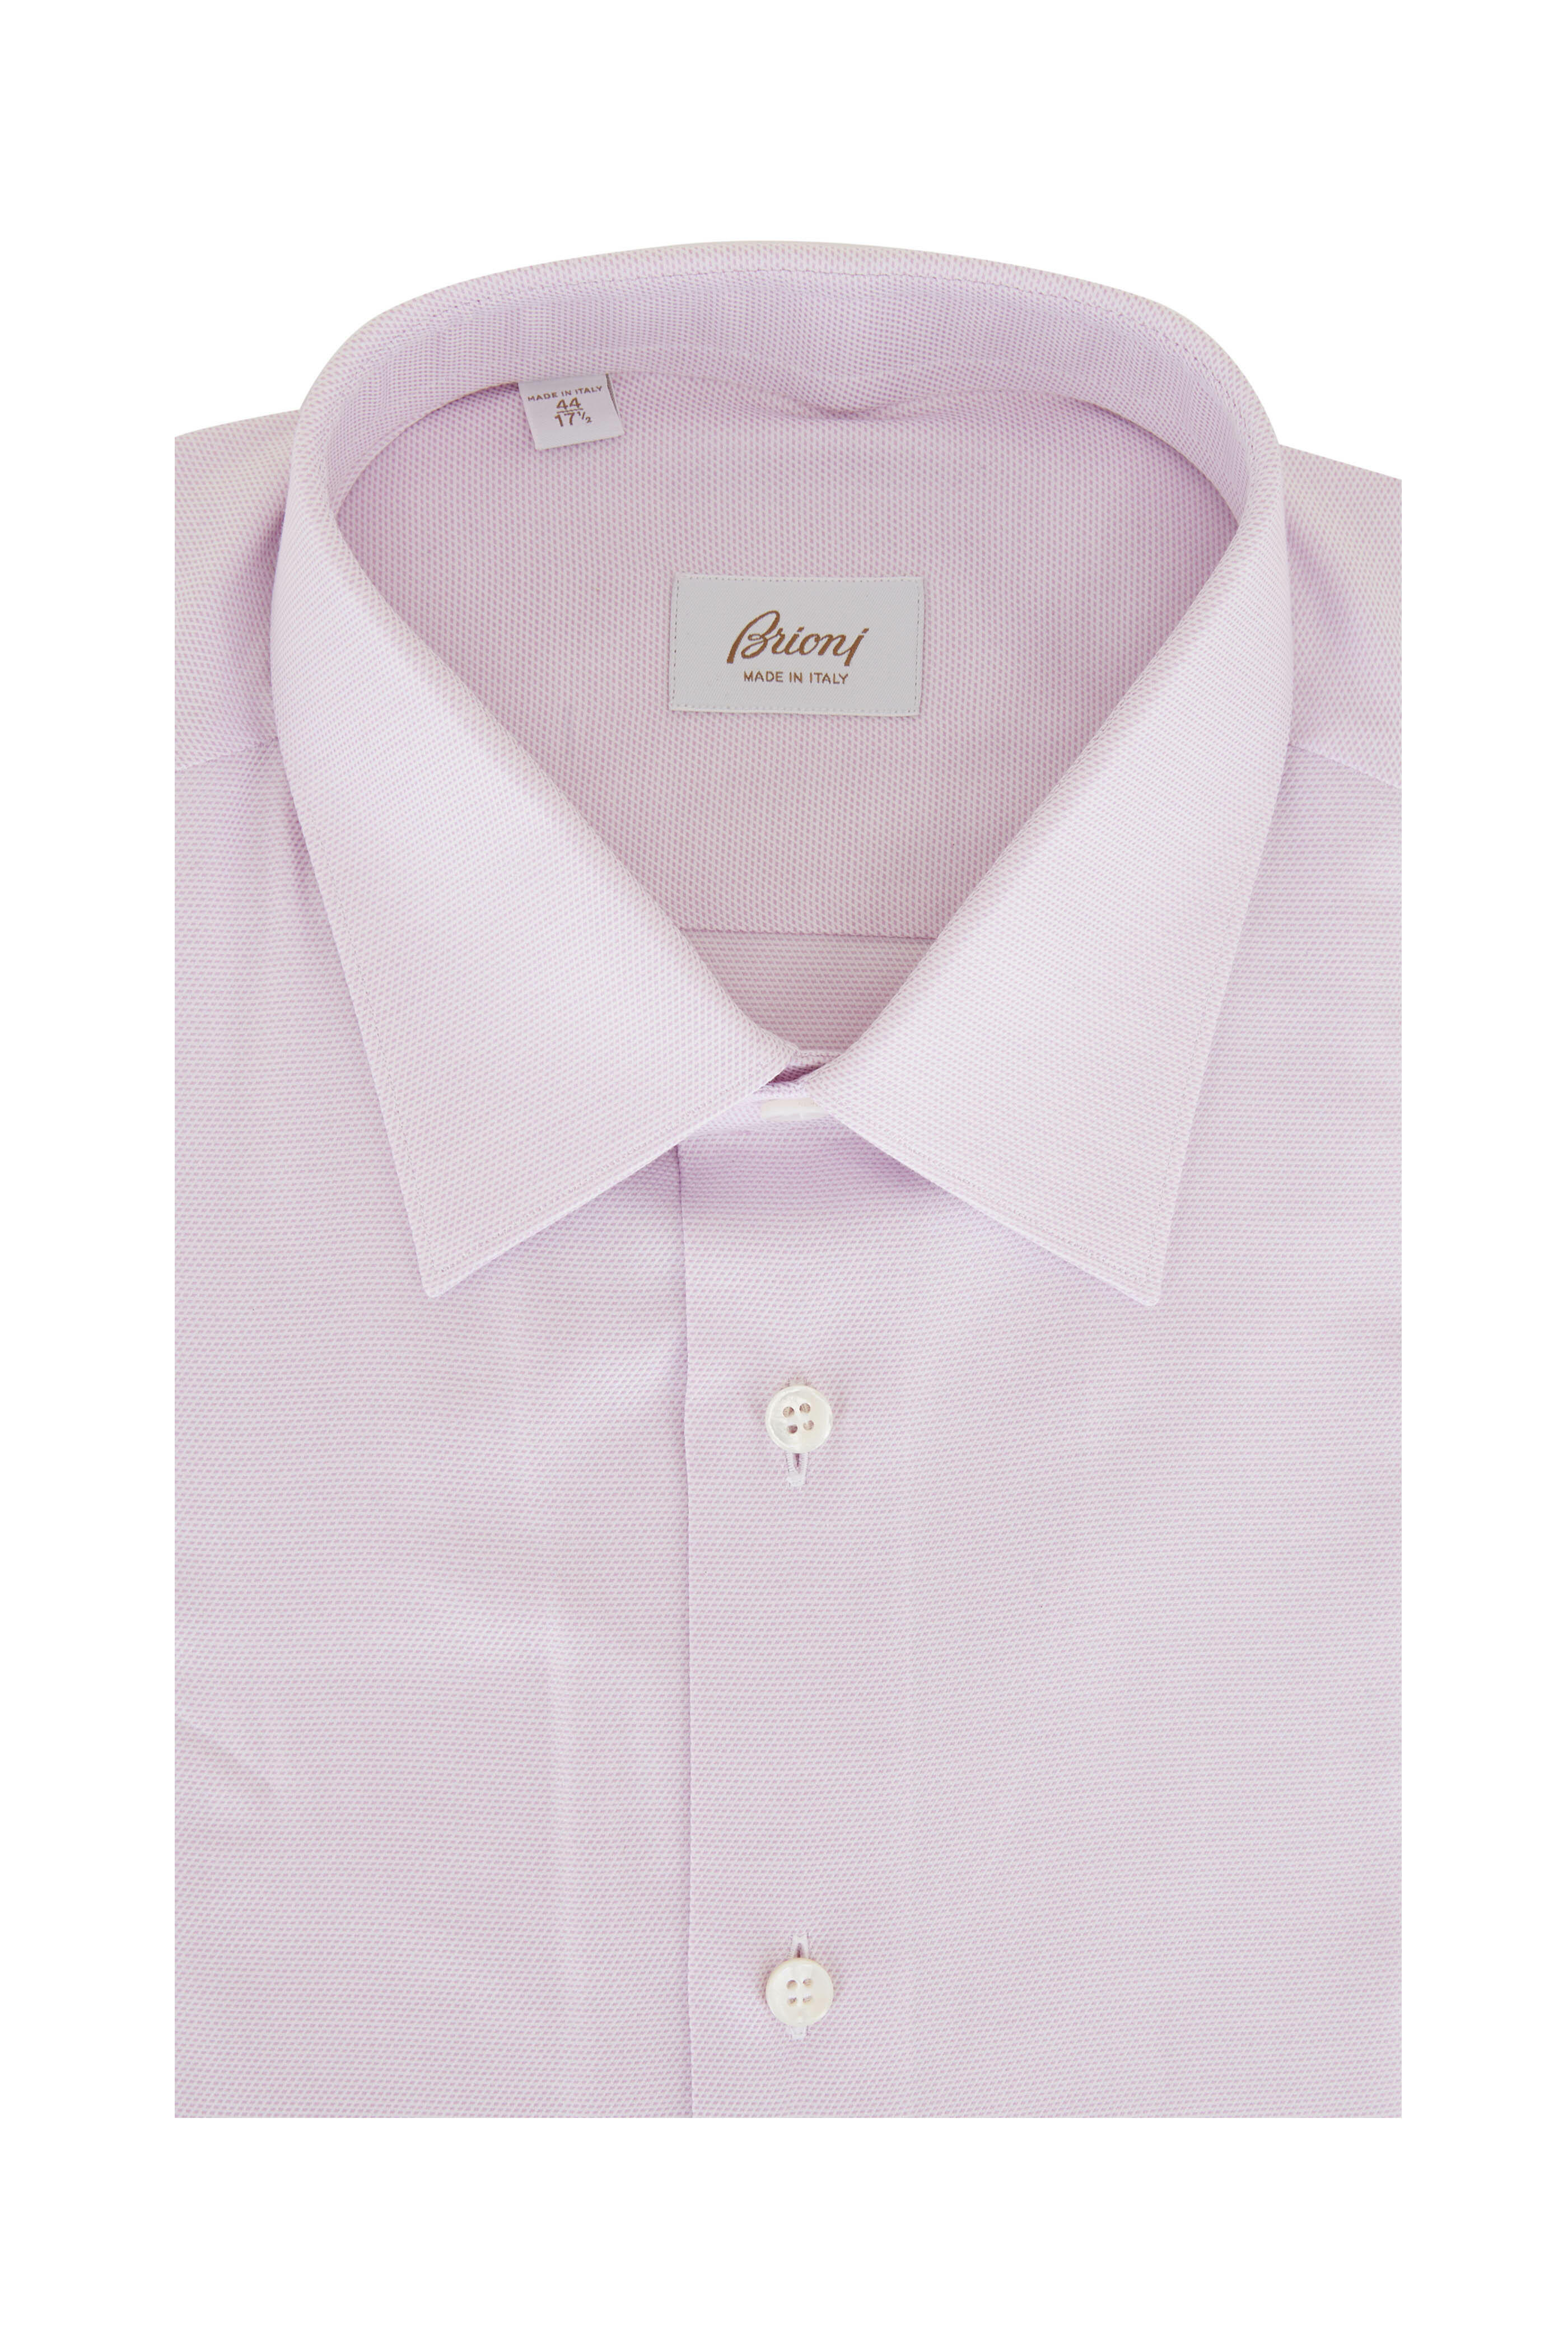 Brioni - Purple Textured Dress Shirt | Mitchell Stores